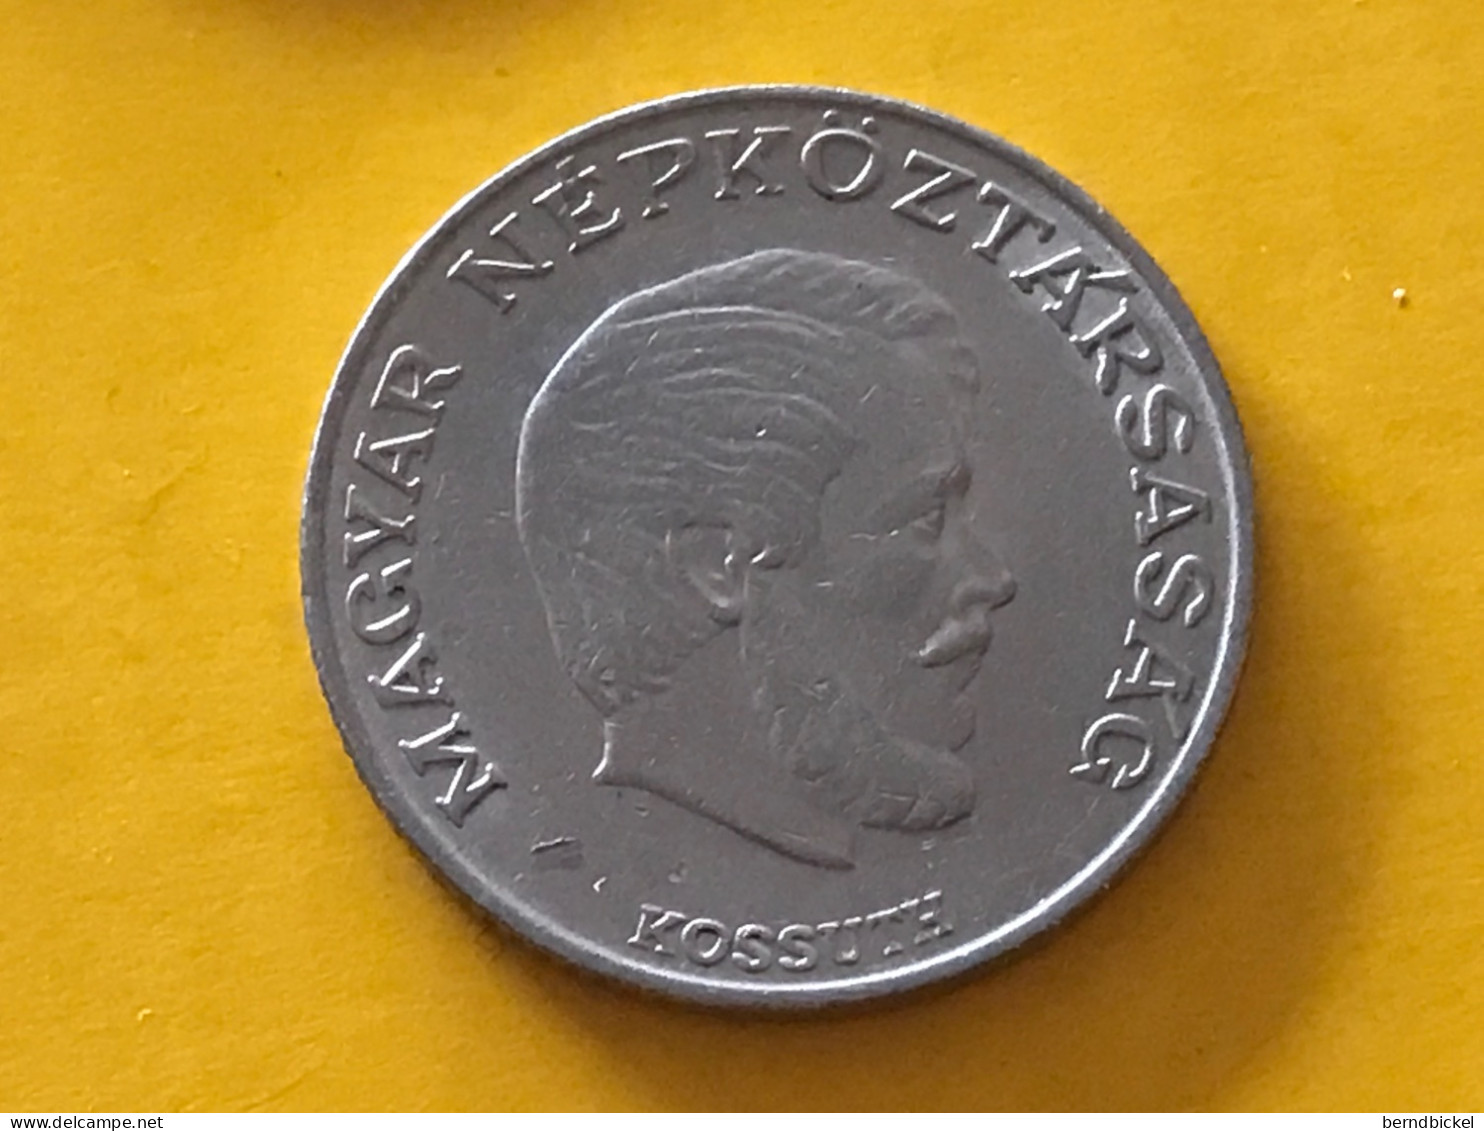 Münze Münzen Umlaufmünze Ungarn 5 Forint 1971 - Hongrie